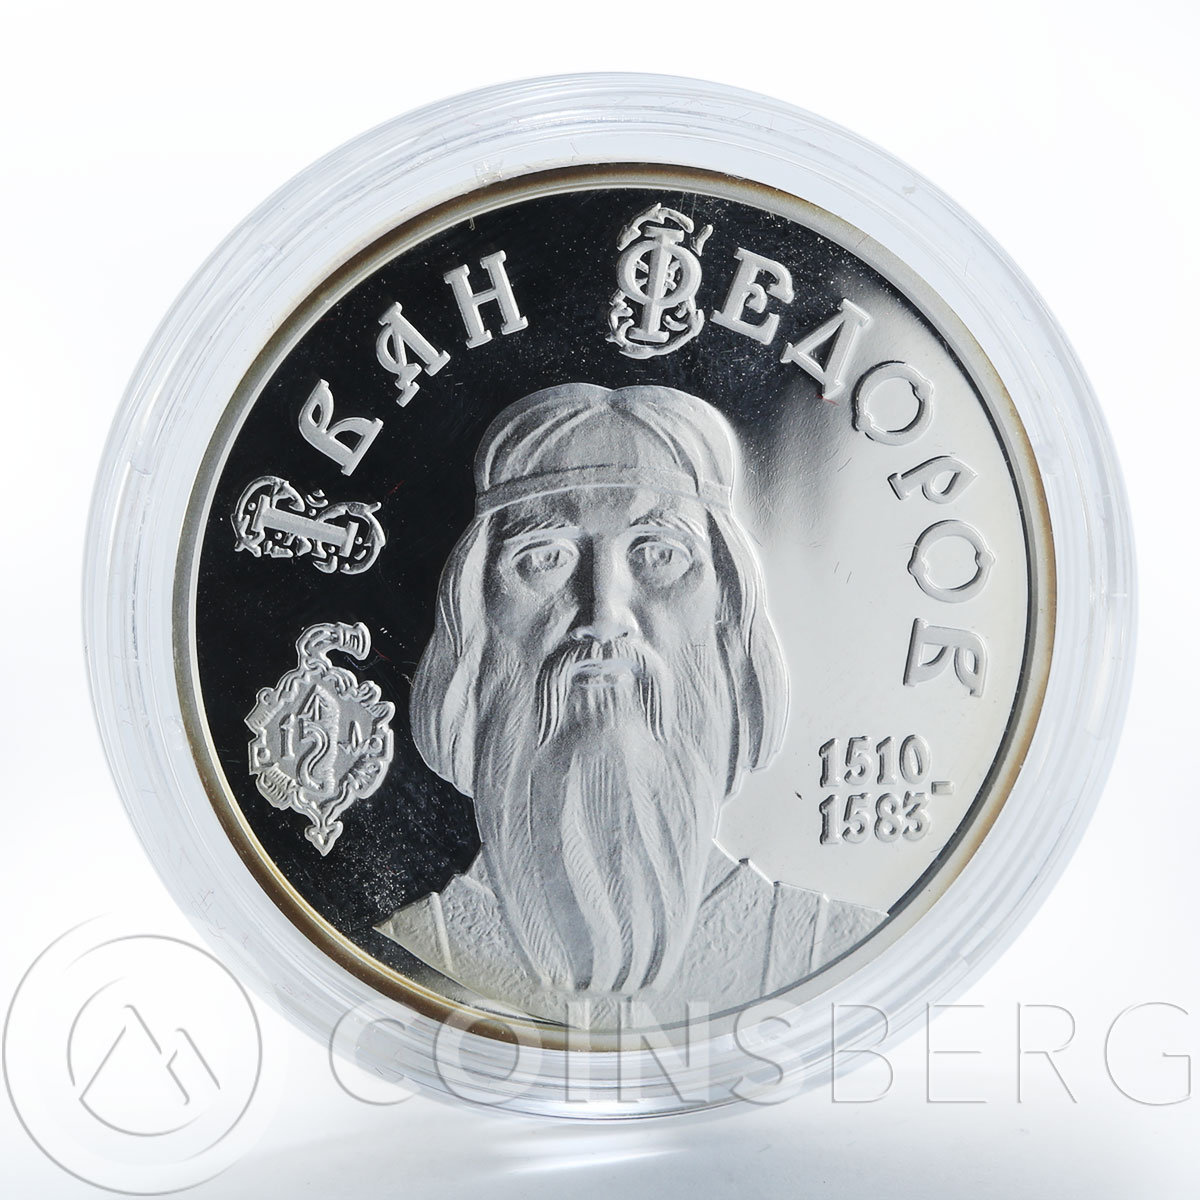 Ukraine 5 hryvnia Ivan Fedorov Printing Engineer Inventor silver coin 2010